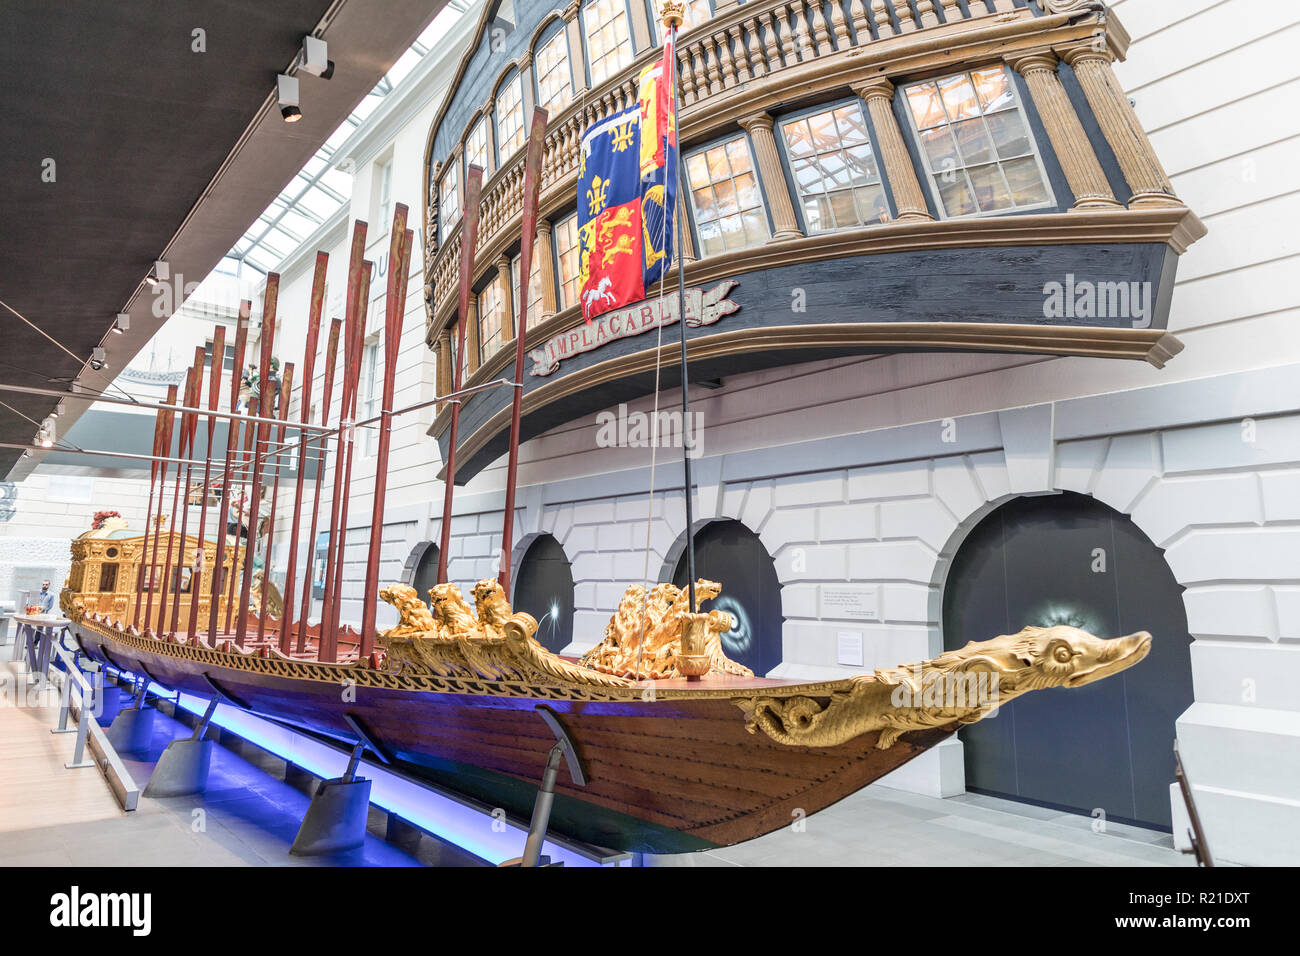 Prince Fredericks Barge Le Musée National Maritime Greenwich London UK Banque D'Images